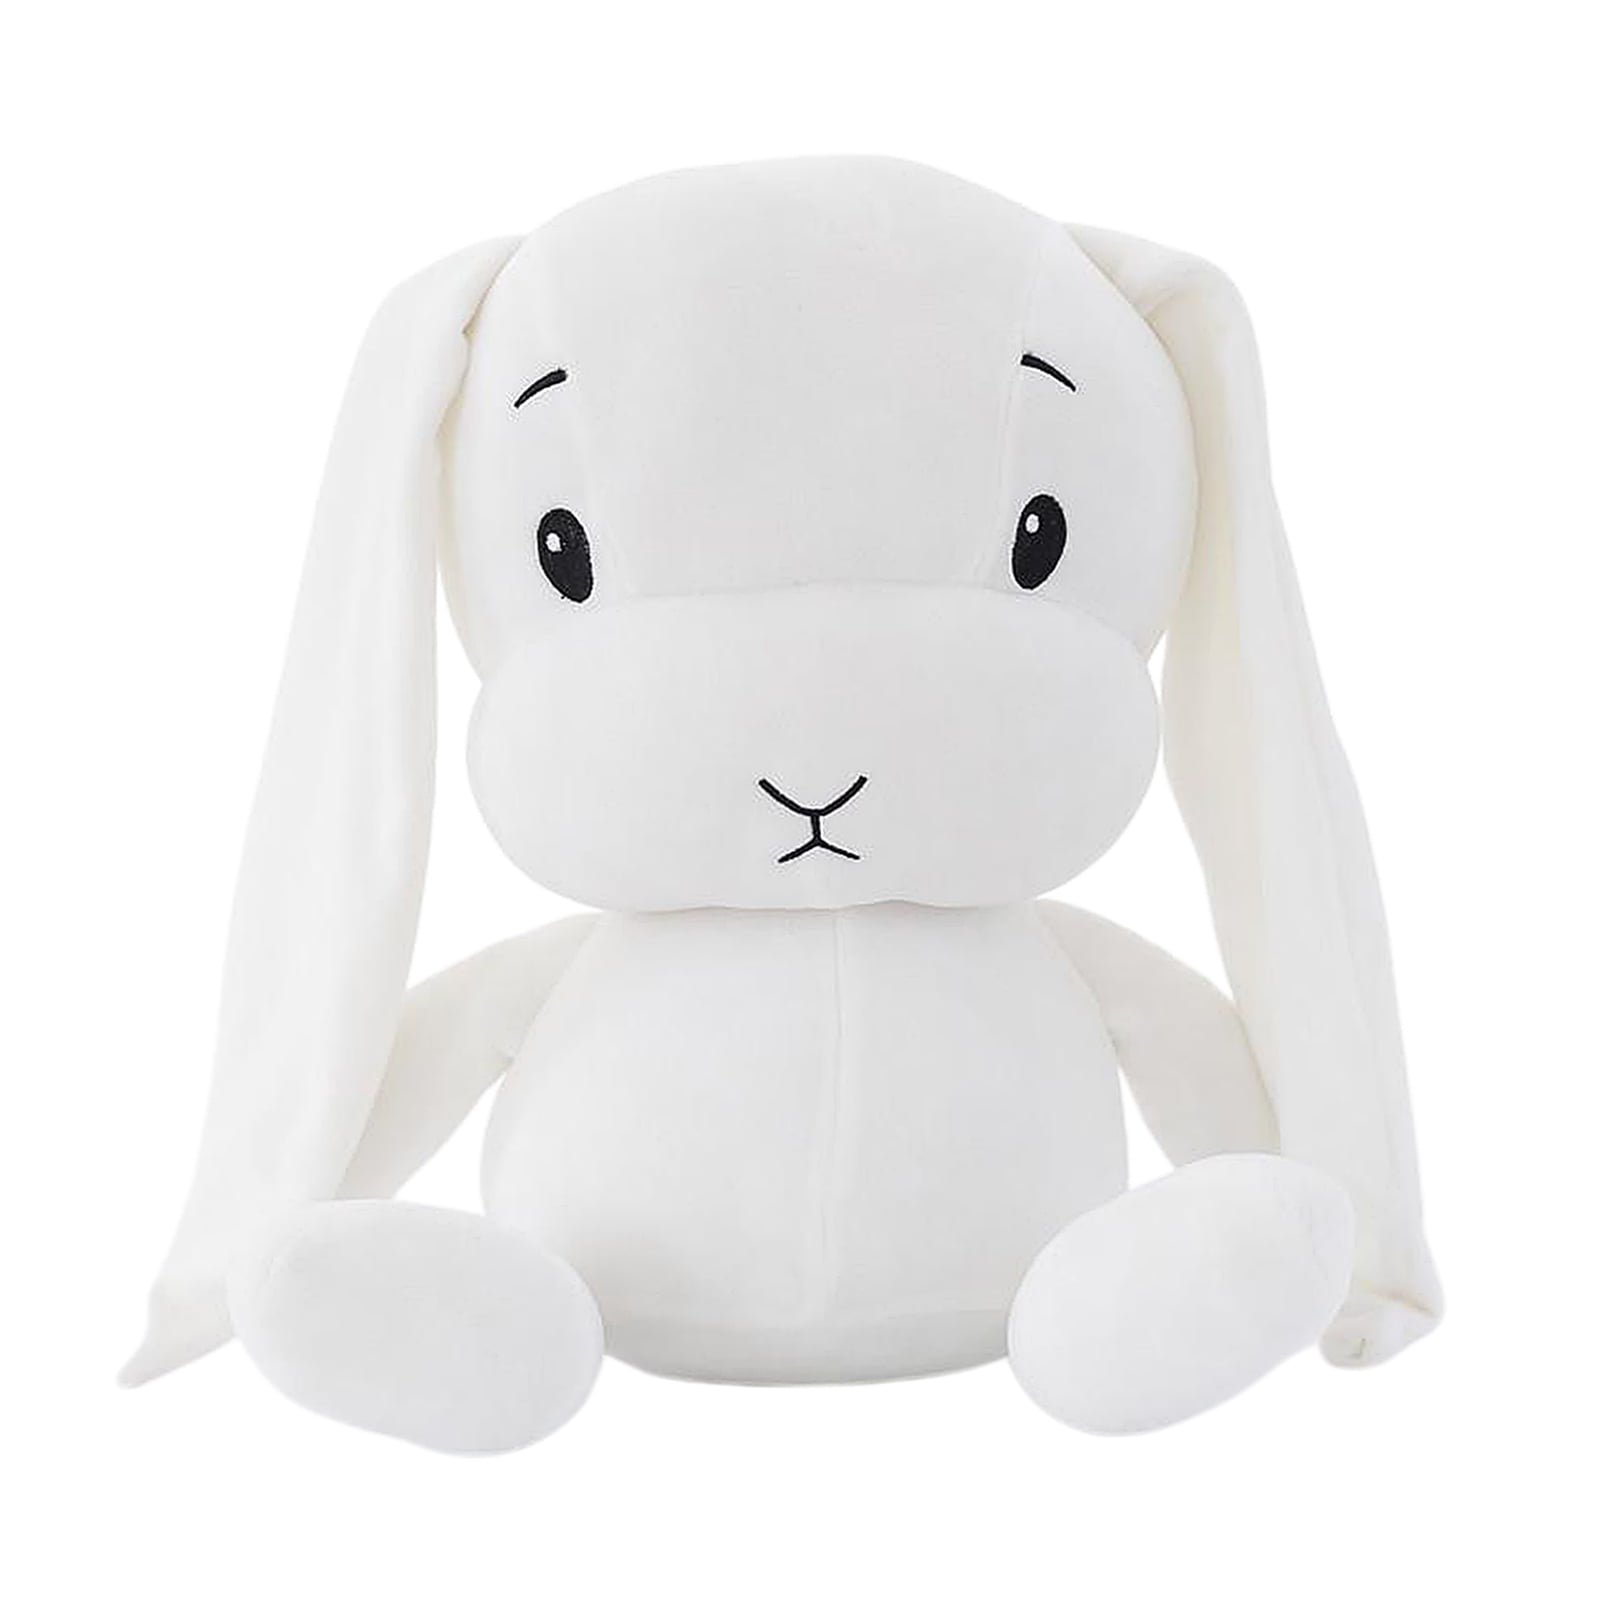 Cute Large Plush Rabbit Stuffed Cartoon Bugs Bunny Pilllow Toy Children's Gifts 